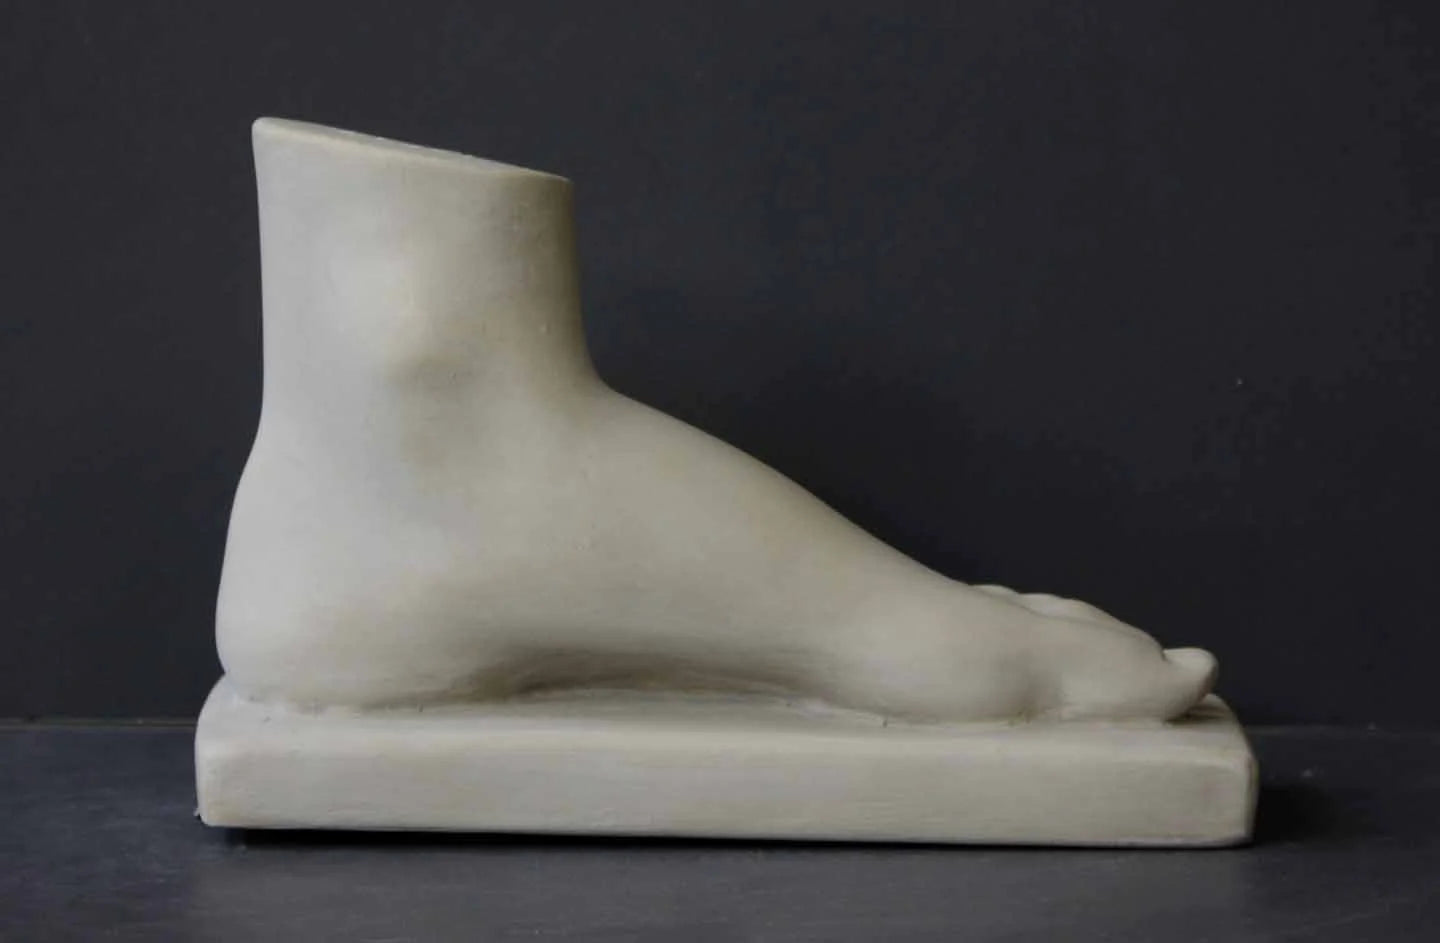 Female Foot Sculpture